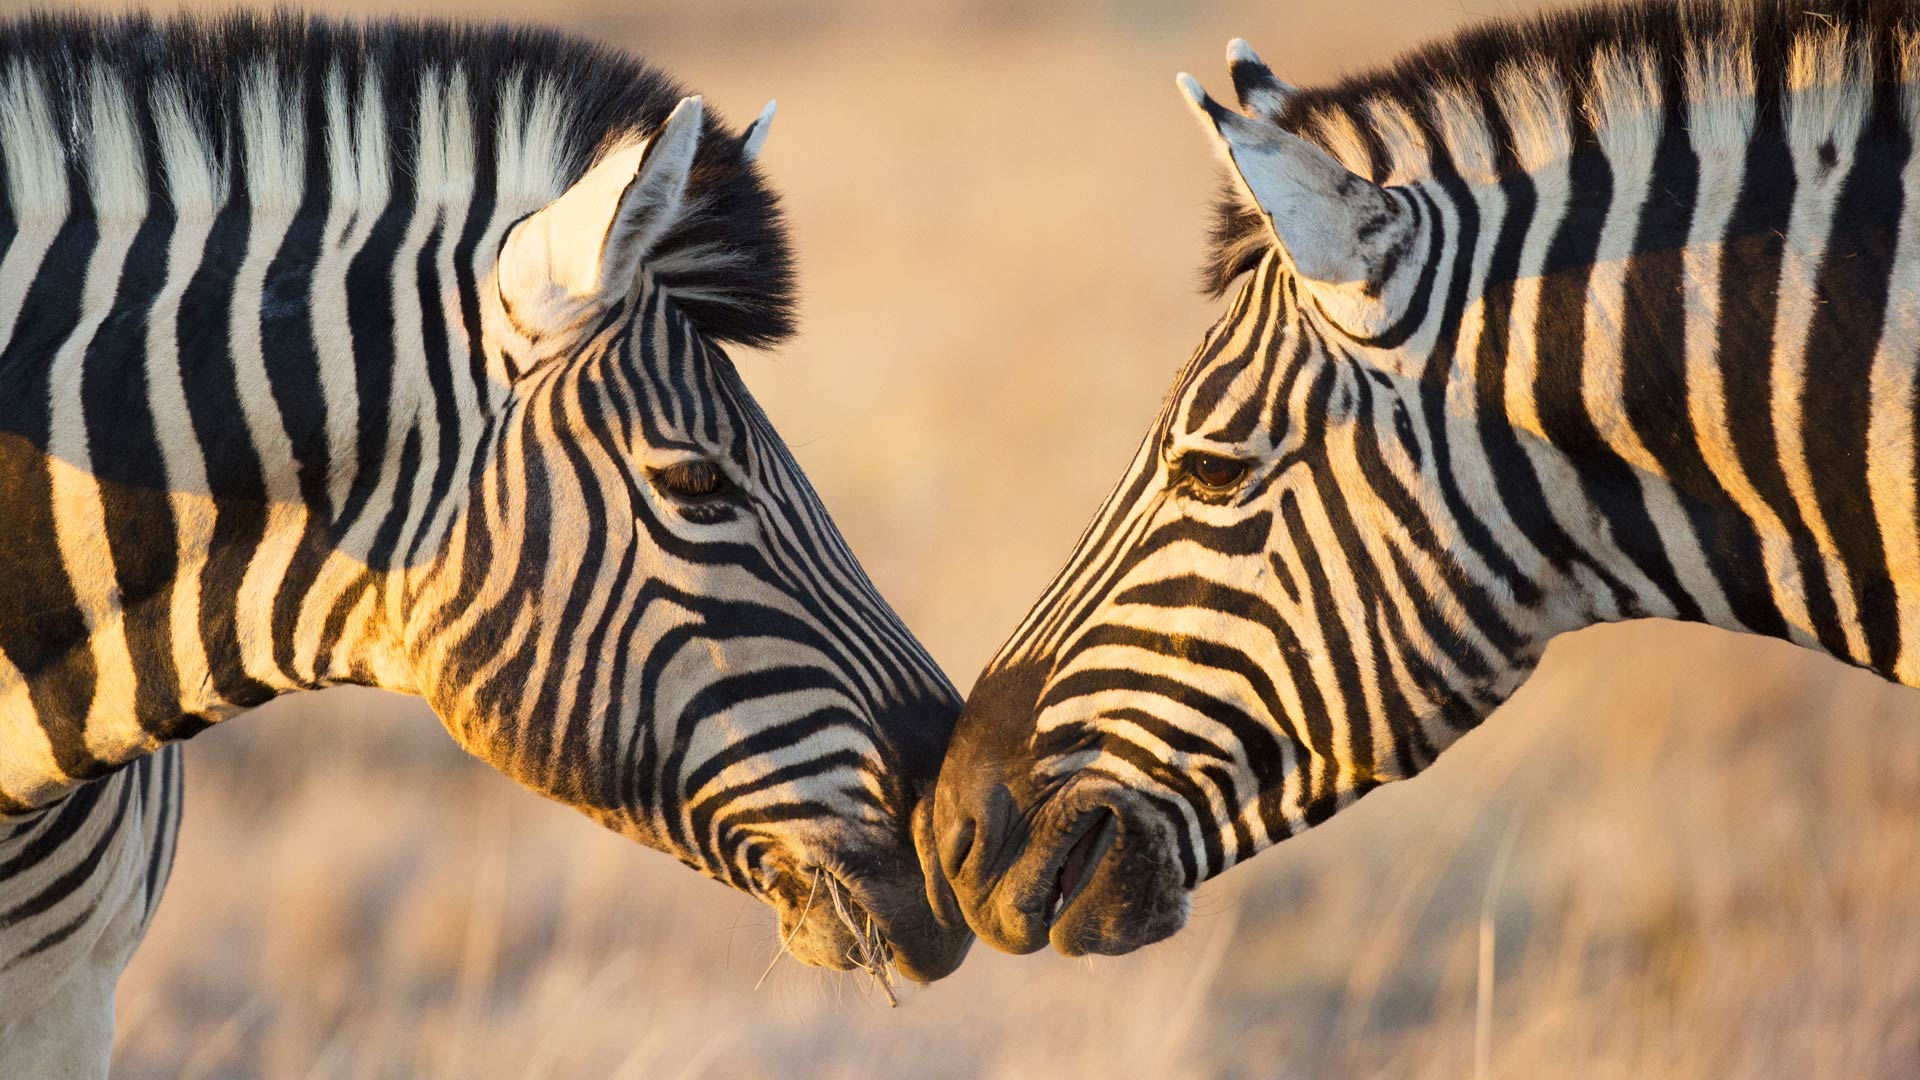 Zebras Greeting